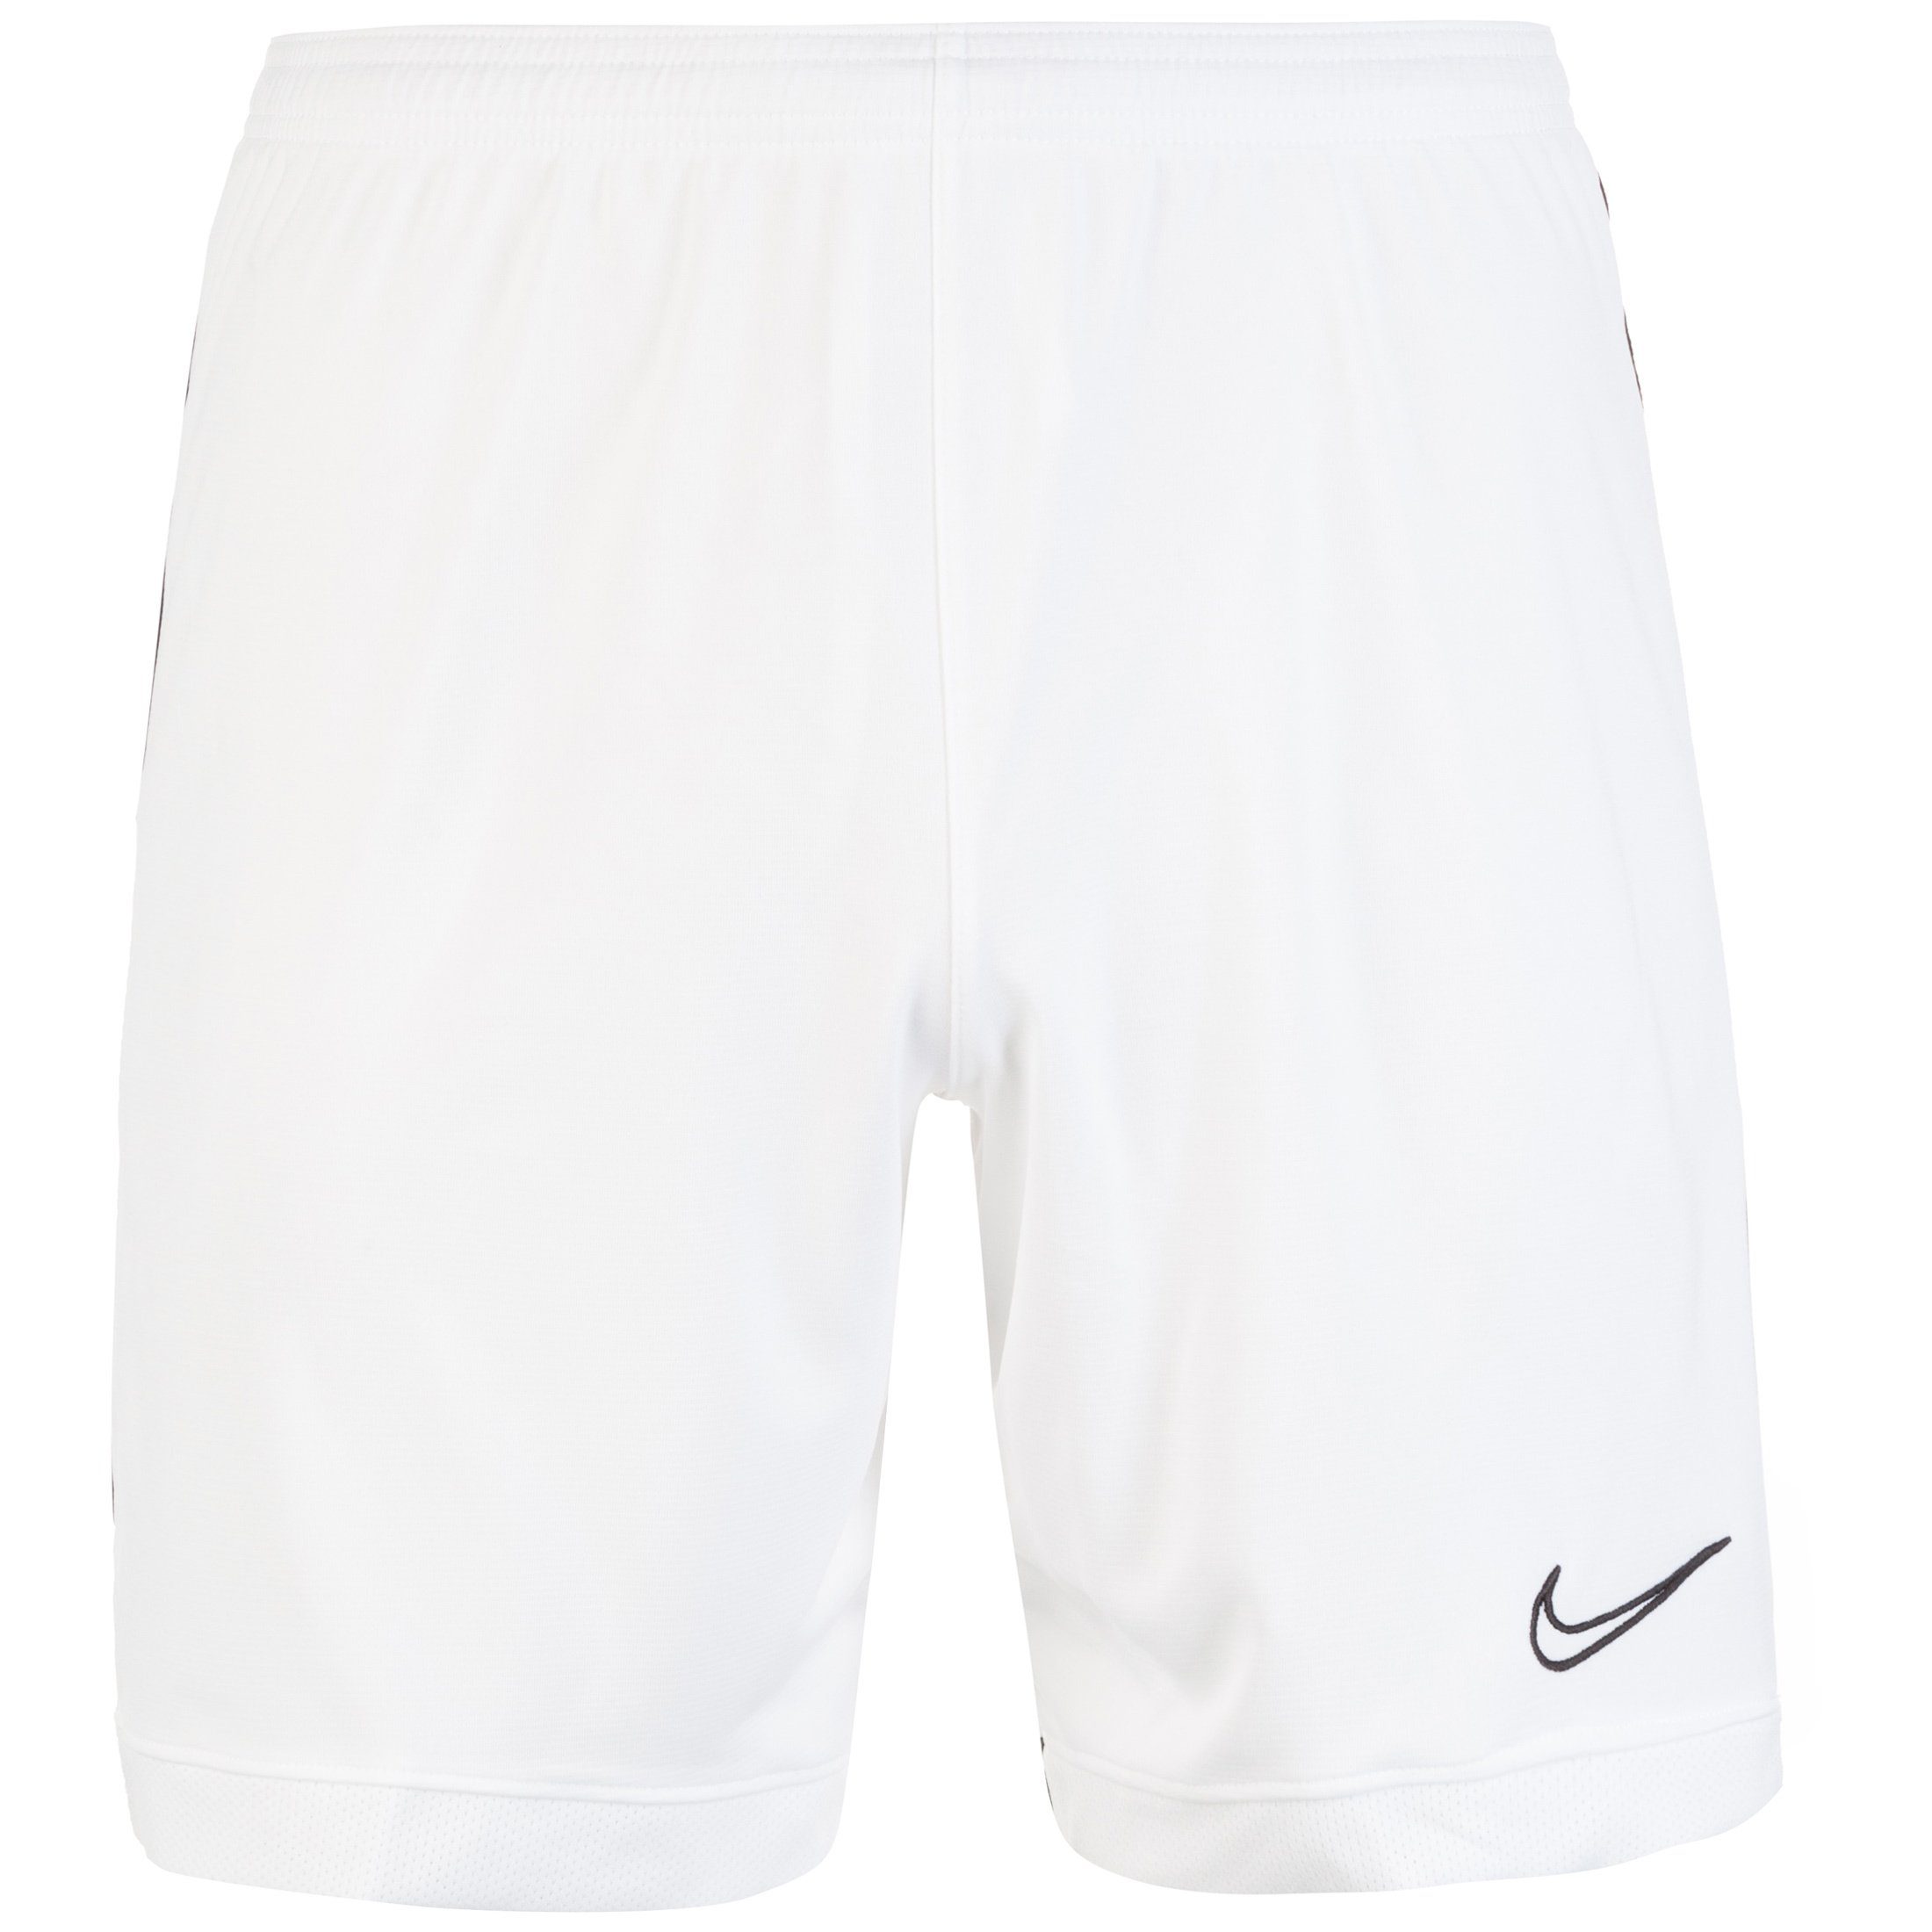 Nike Shorts »Dry Academy«, Hohe Strapazierfähigkeit online kaufen | OTTO